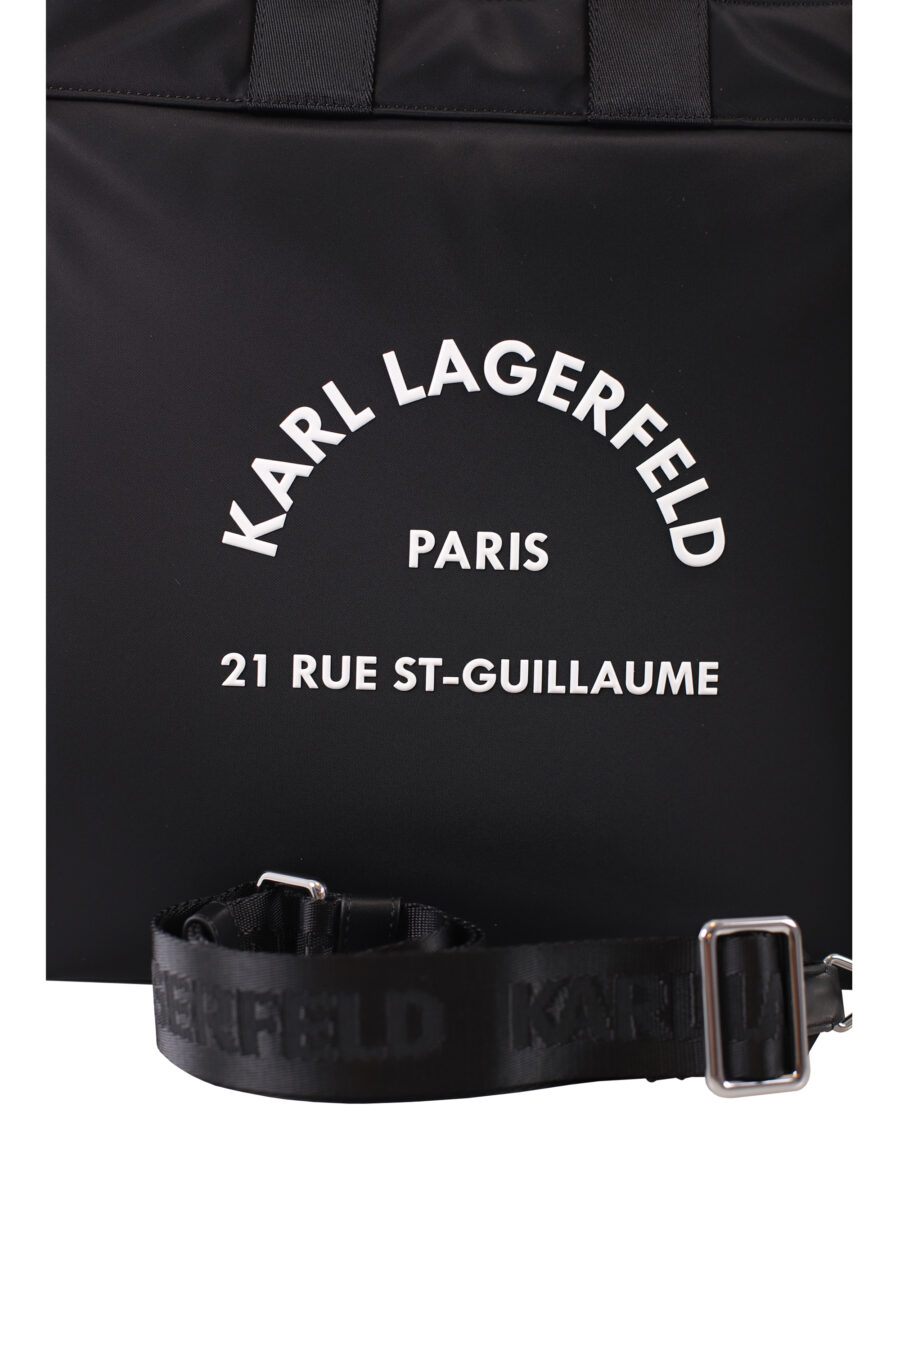 Tote bag negro de nylon con logo "rue st-guillaume" - IMG 1598